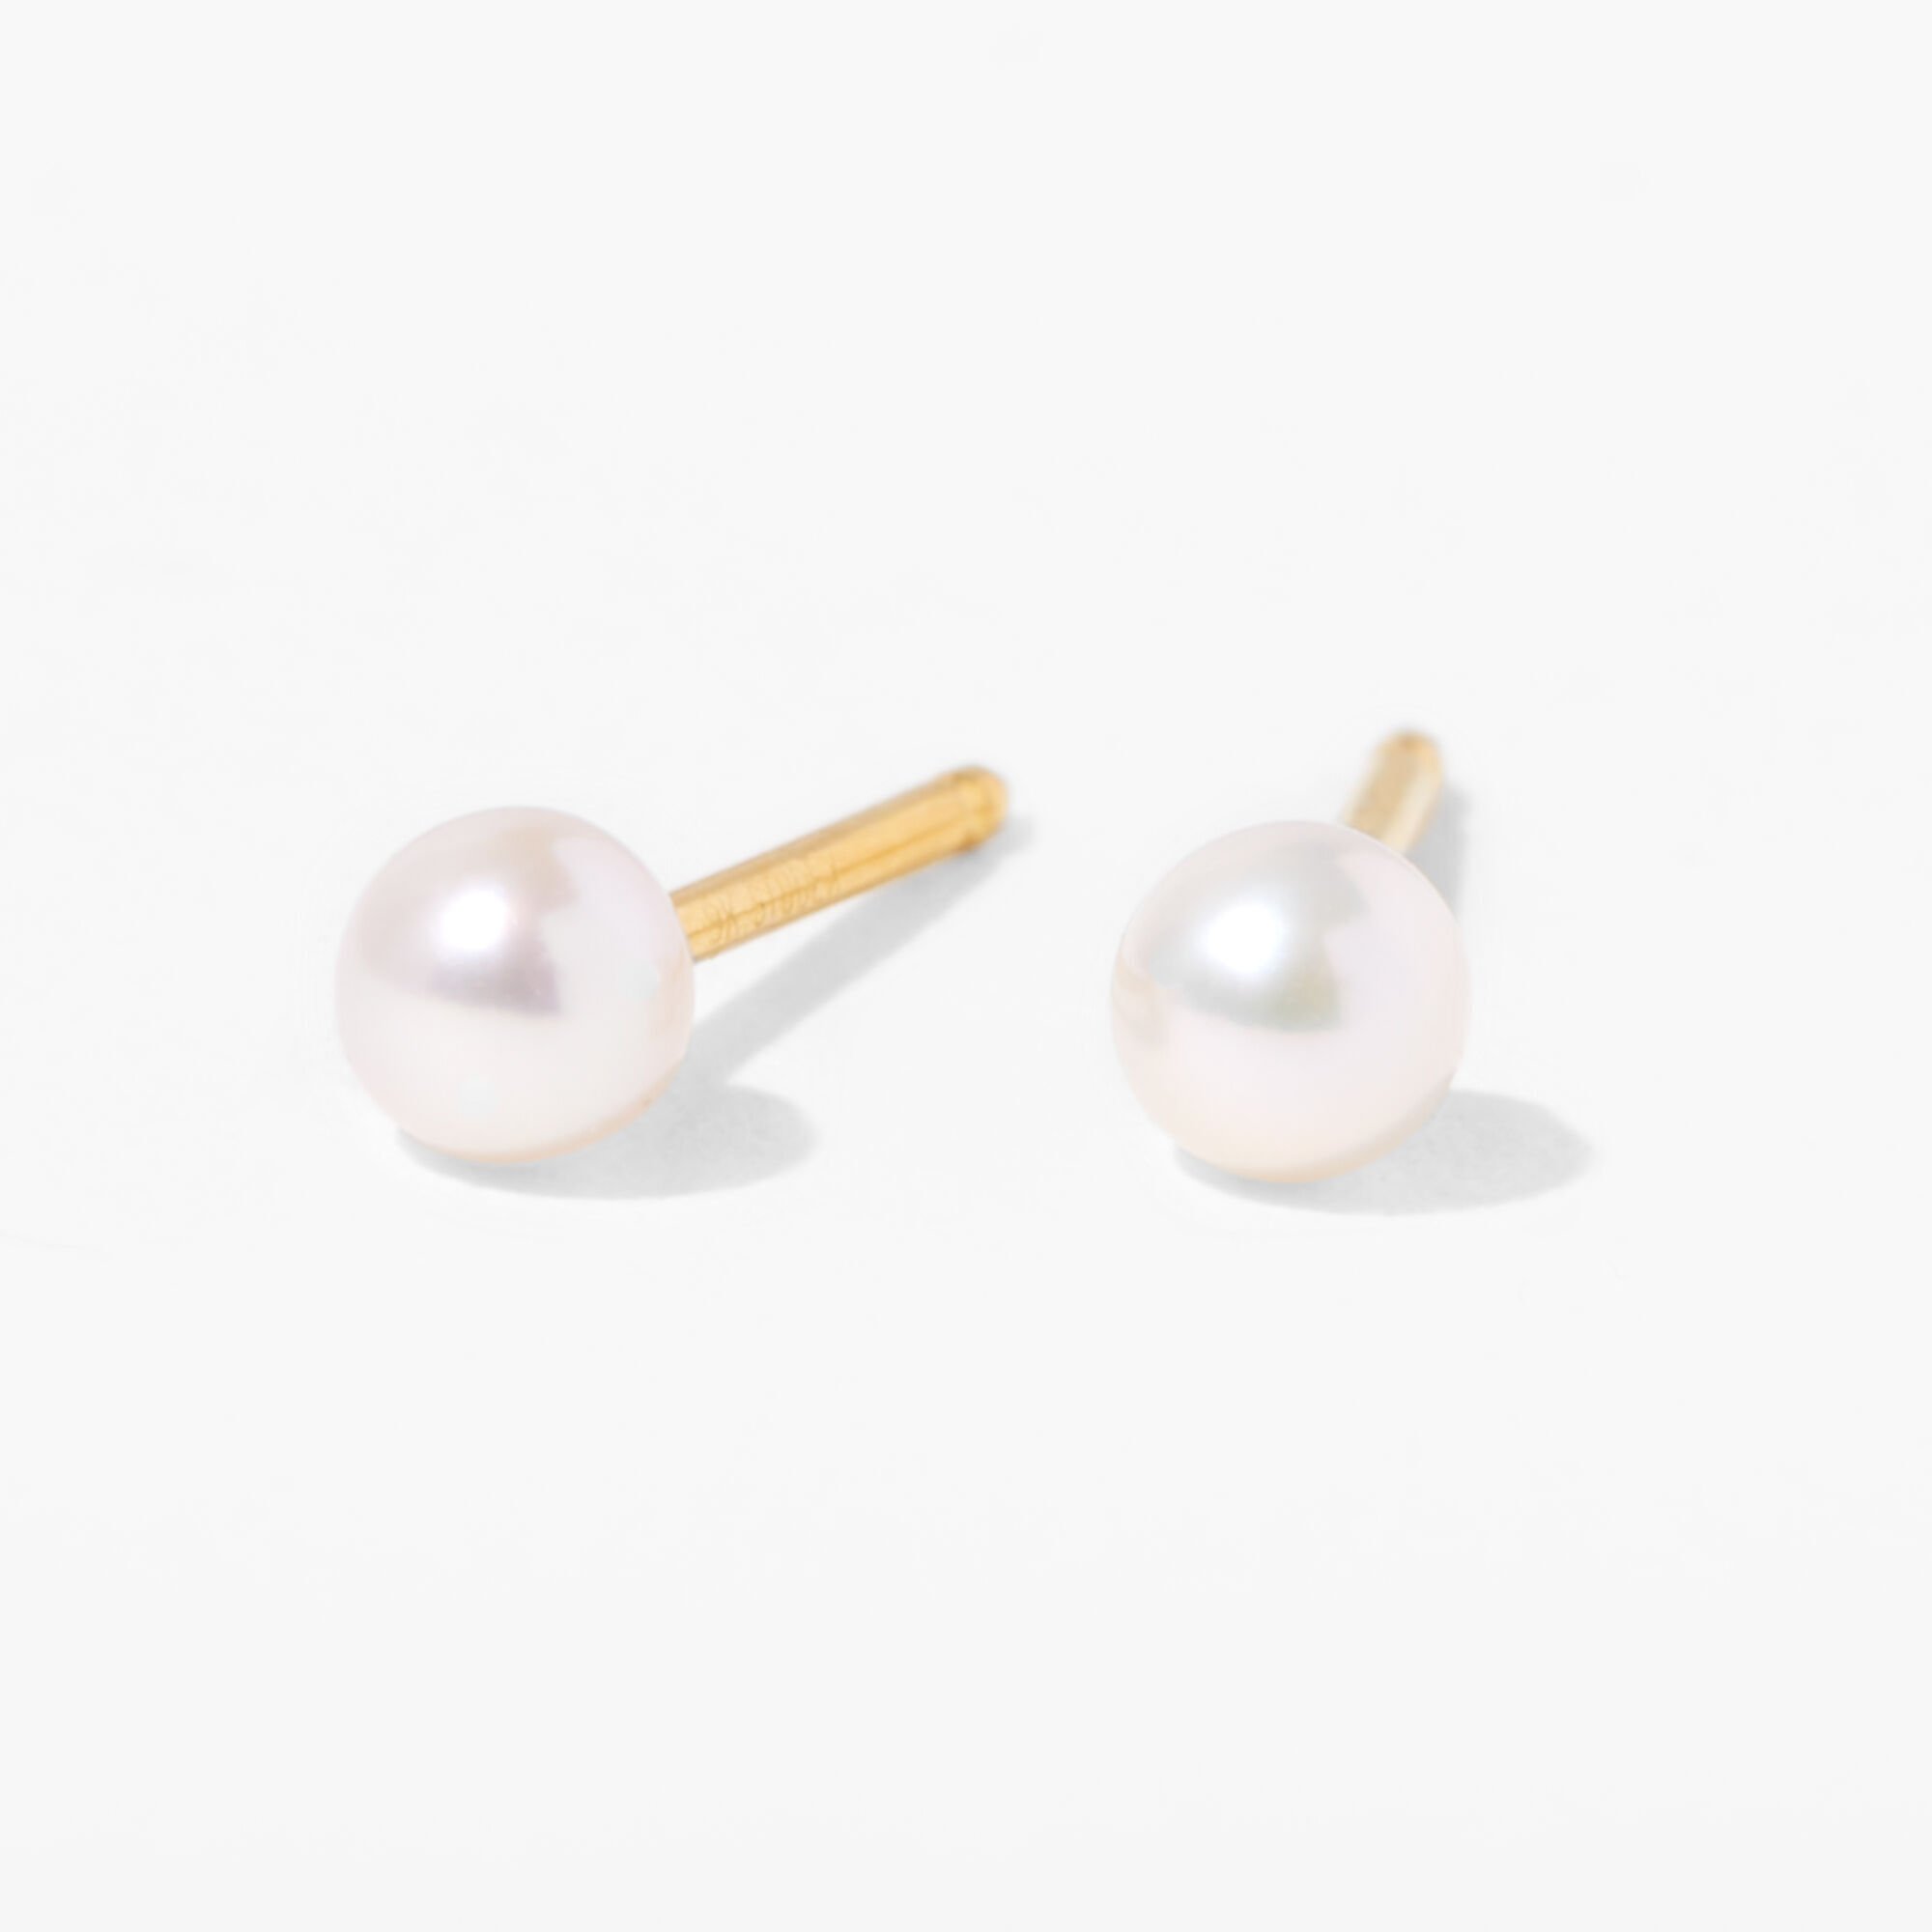 Shop Earrings Online - Gold, Silver, Pearls, Beaded & More - Lovisa